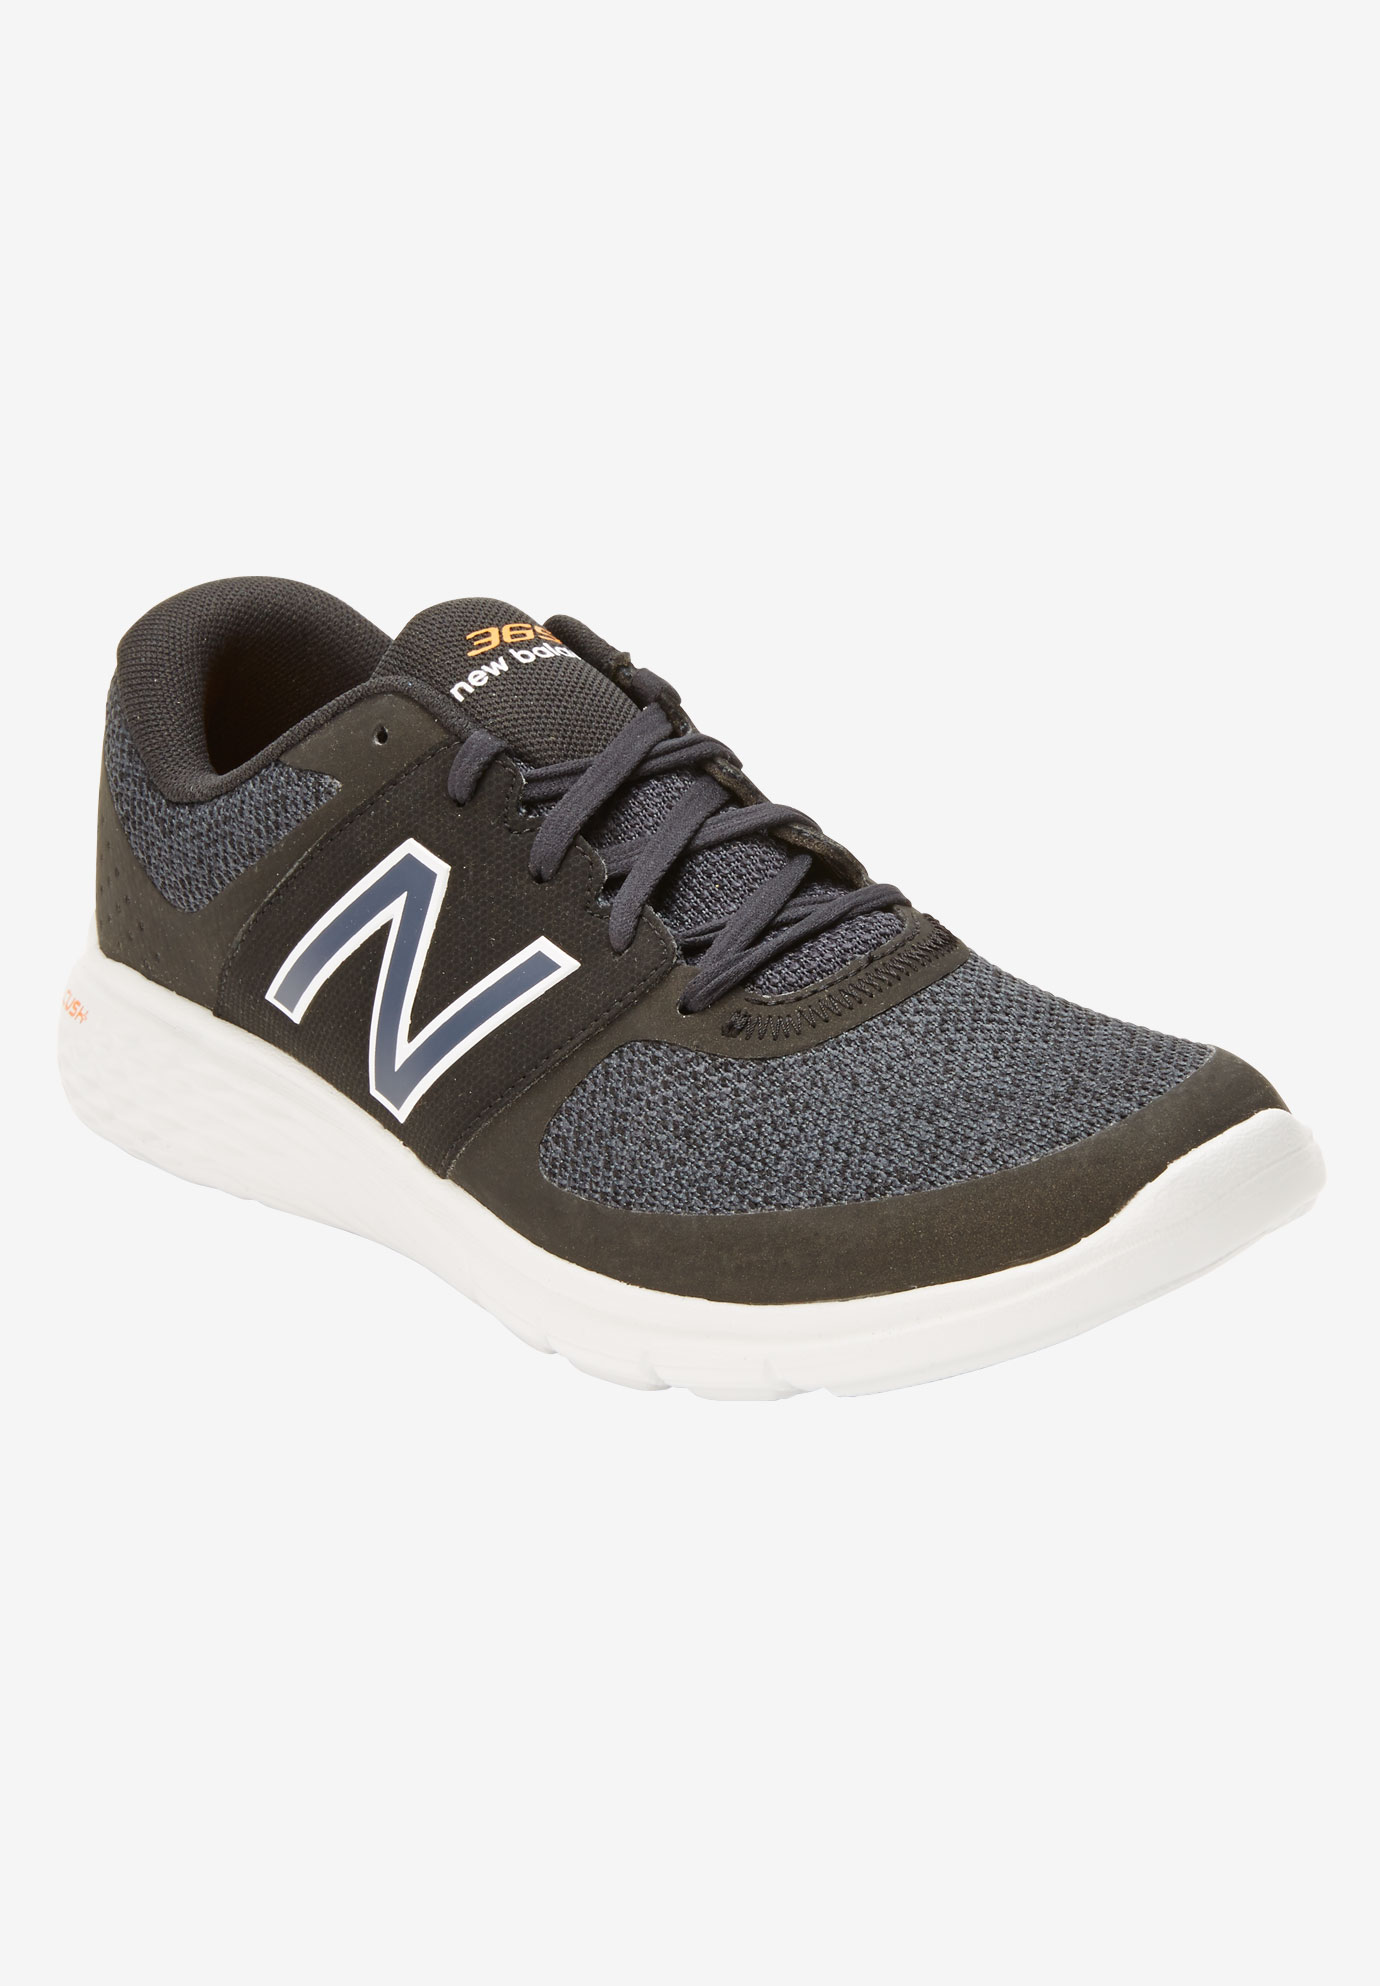 New Balance® 365v1 Athletic Shoes| Big 